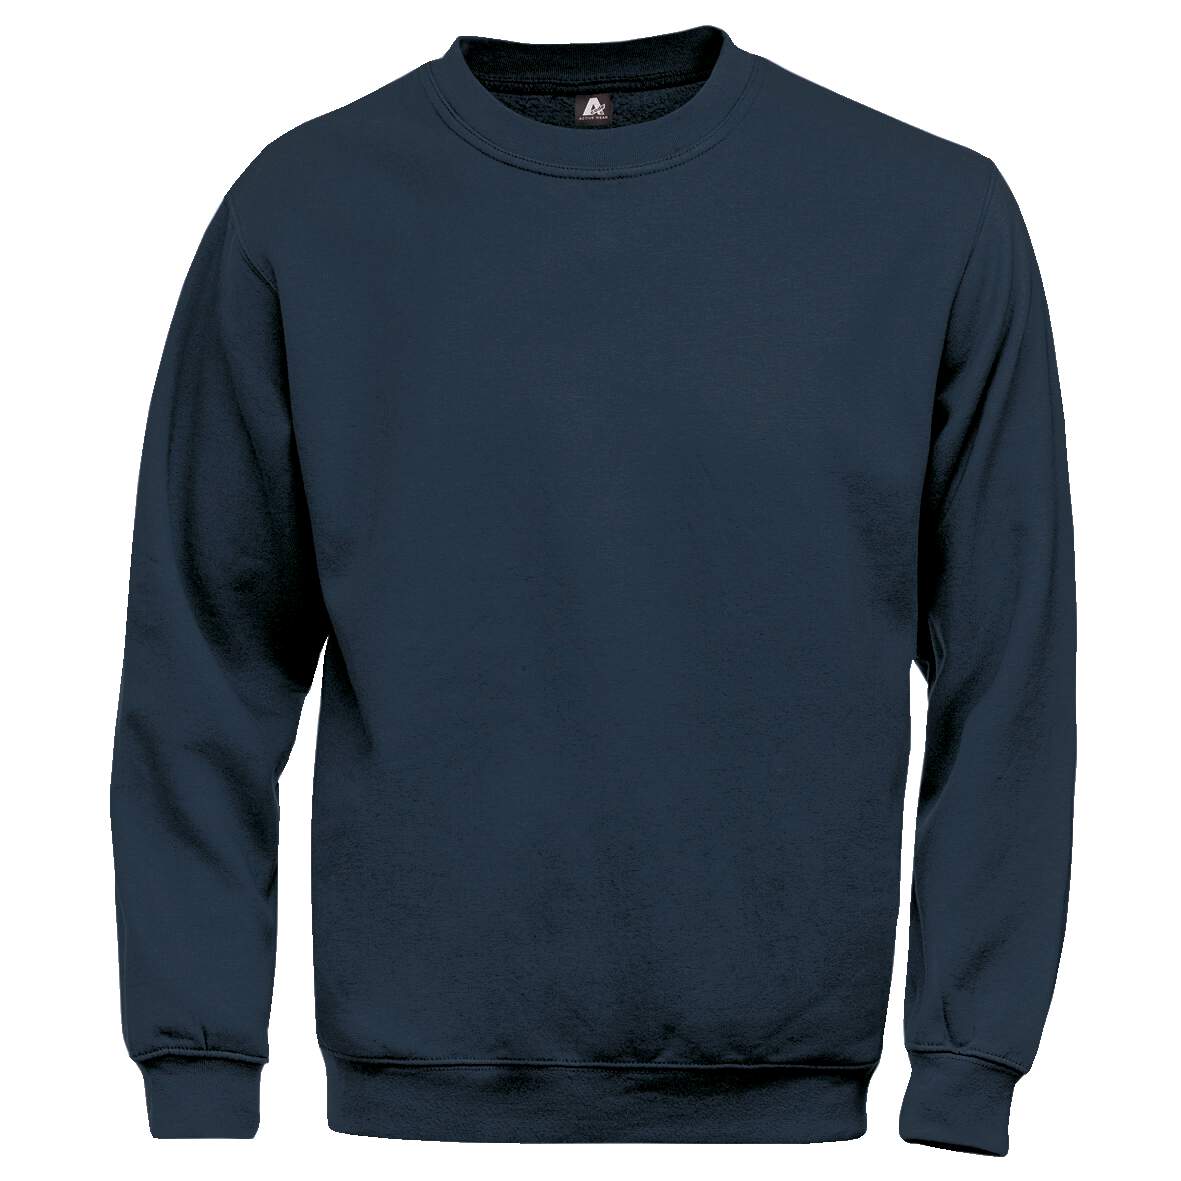 1181246 - Sweatshirt marine 100225